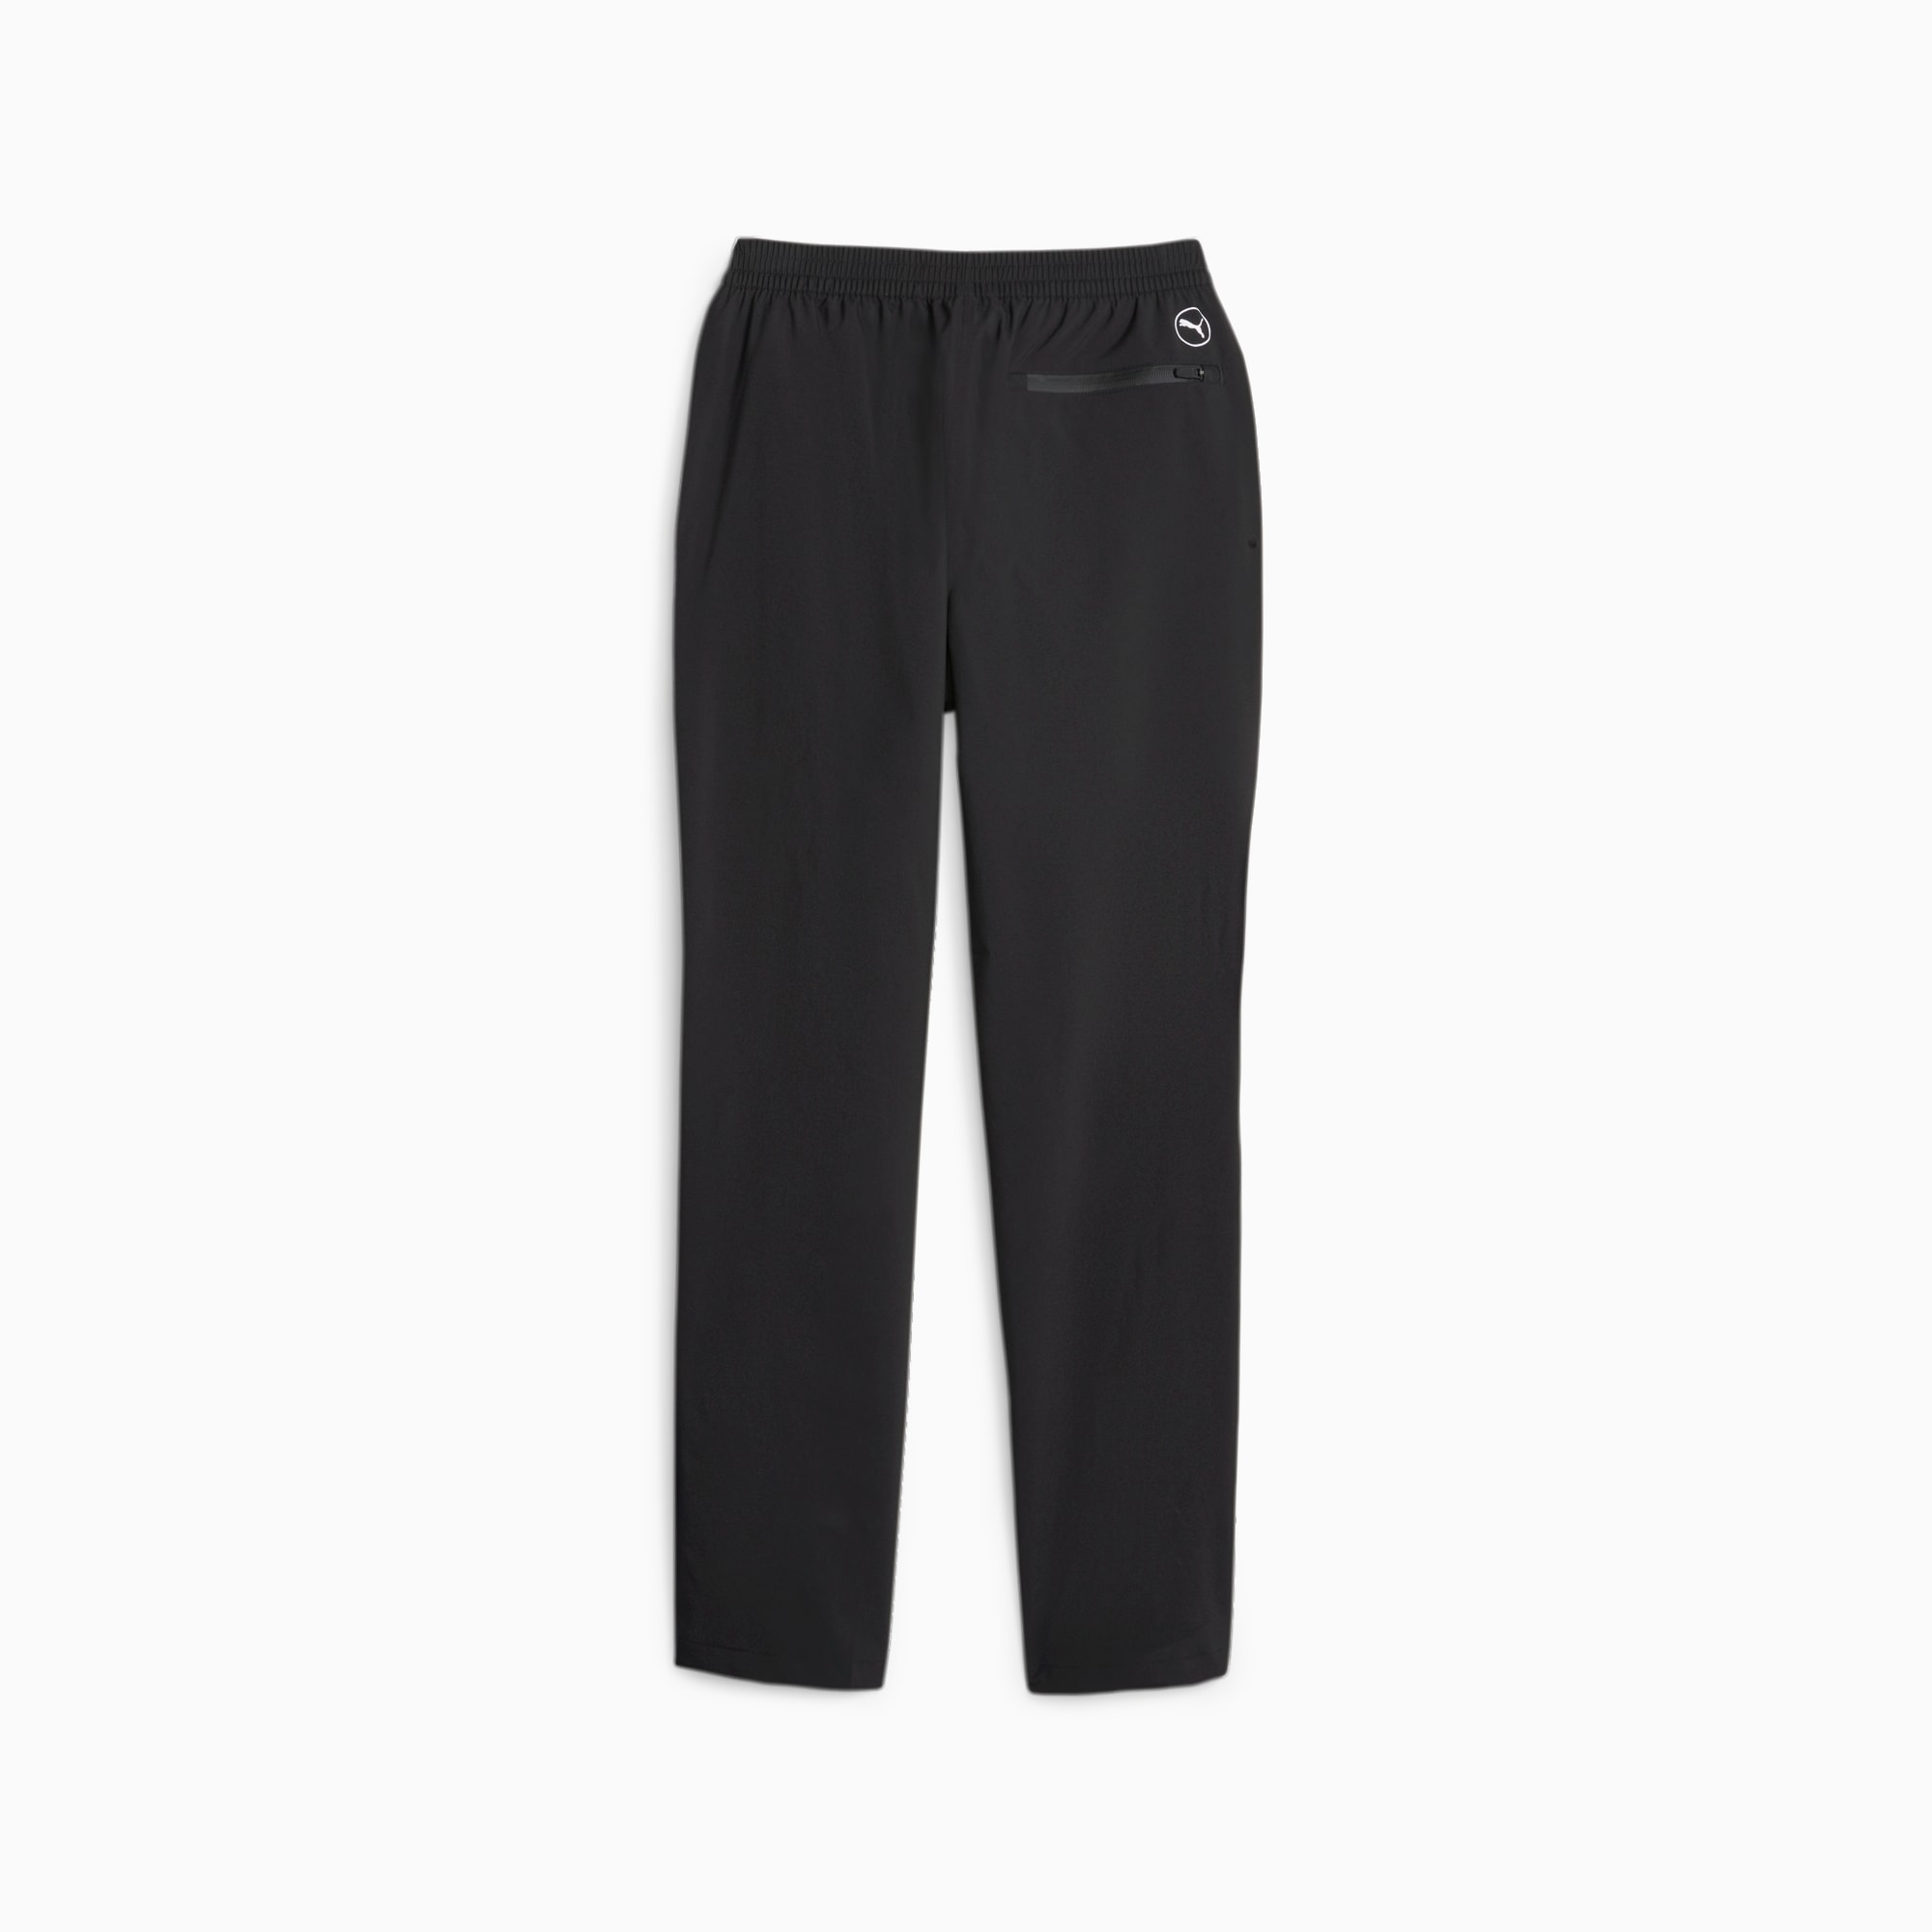 PUMA Drylbl Men's Rain Pants, Black, Size XL/S, Clothing